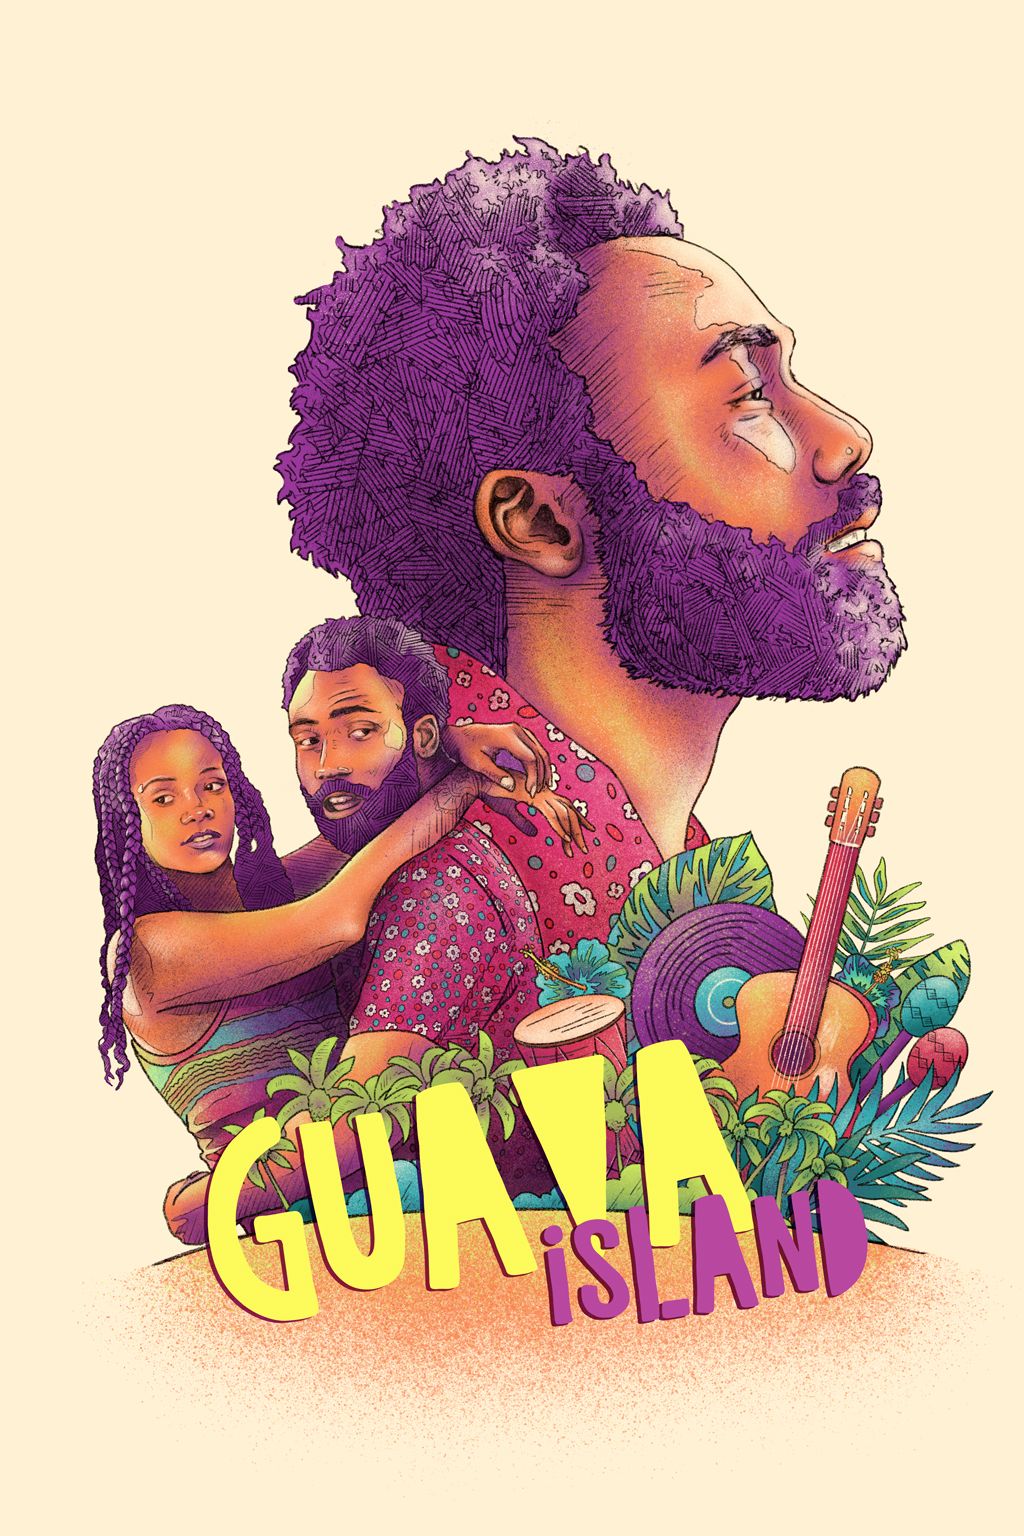 Guava-sziget